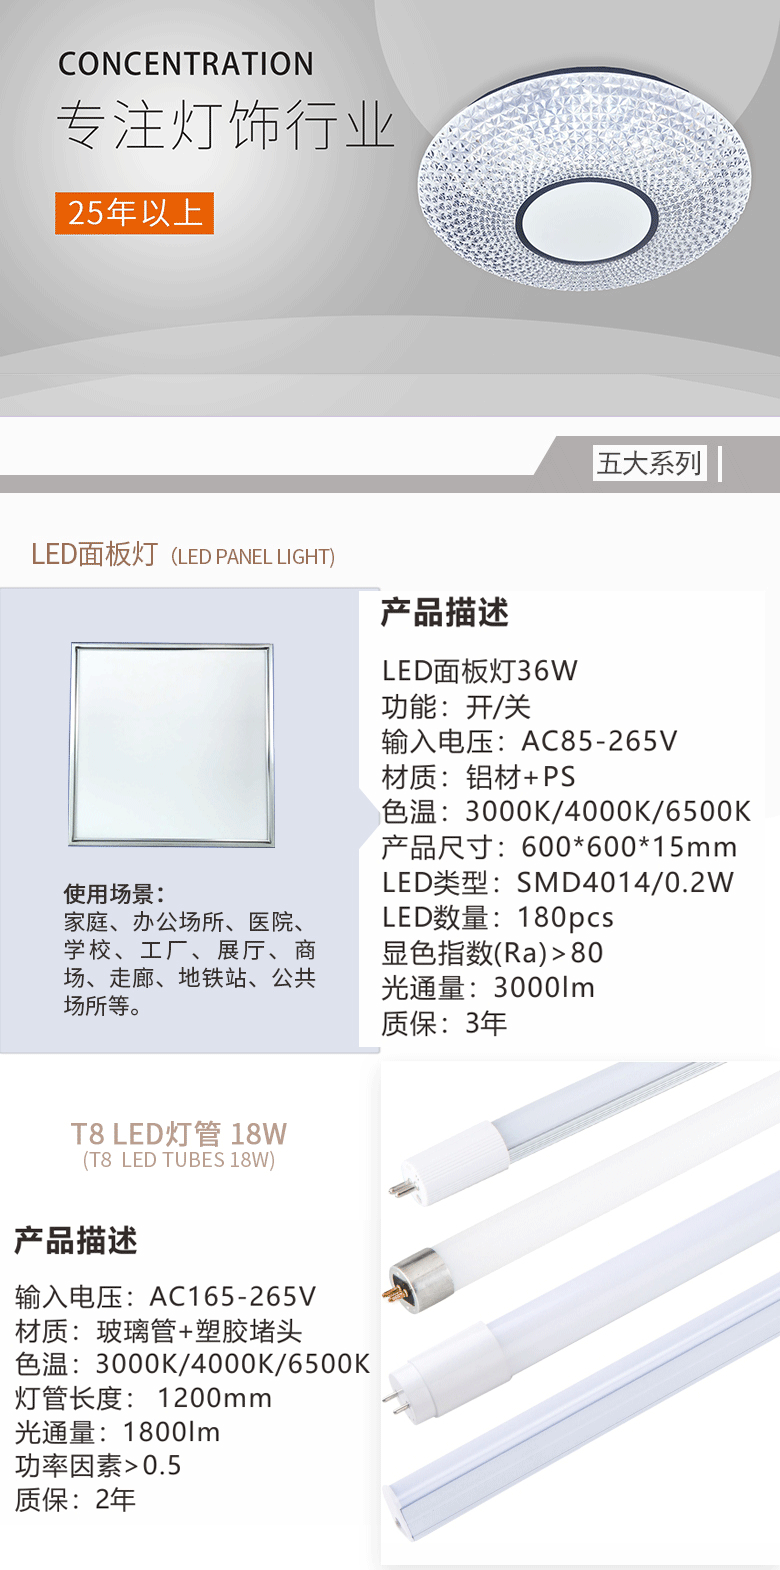 LED轨道灯产品简介